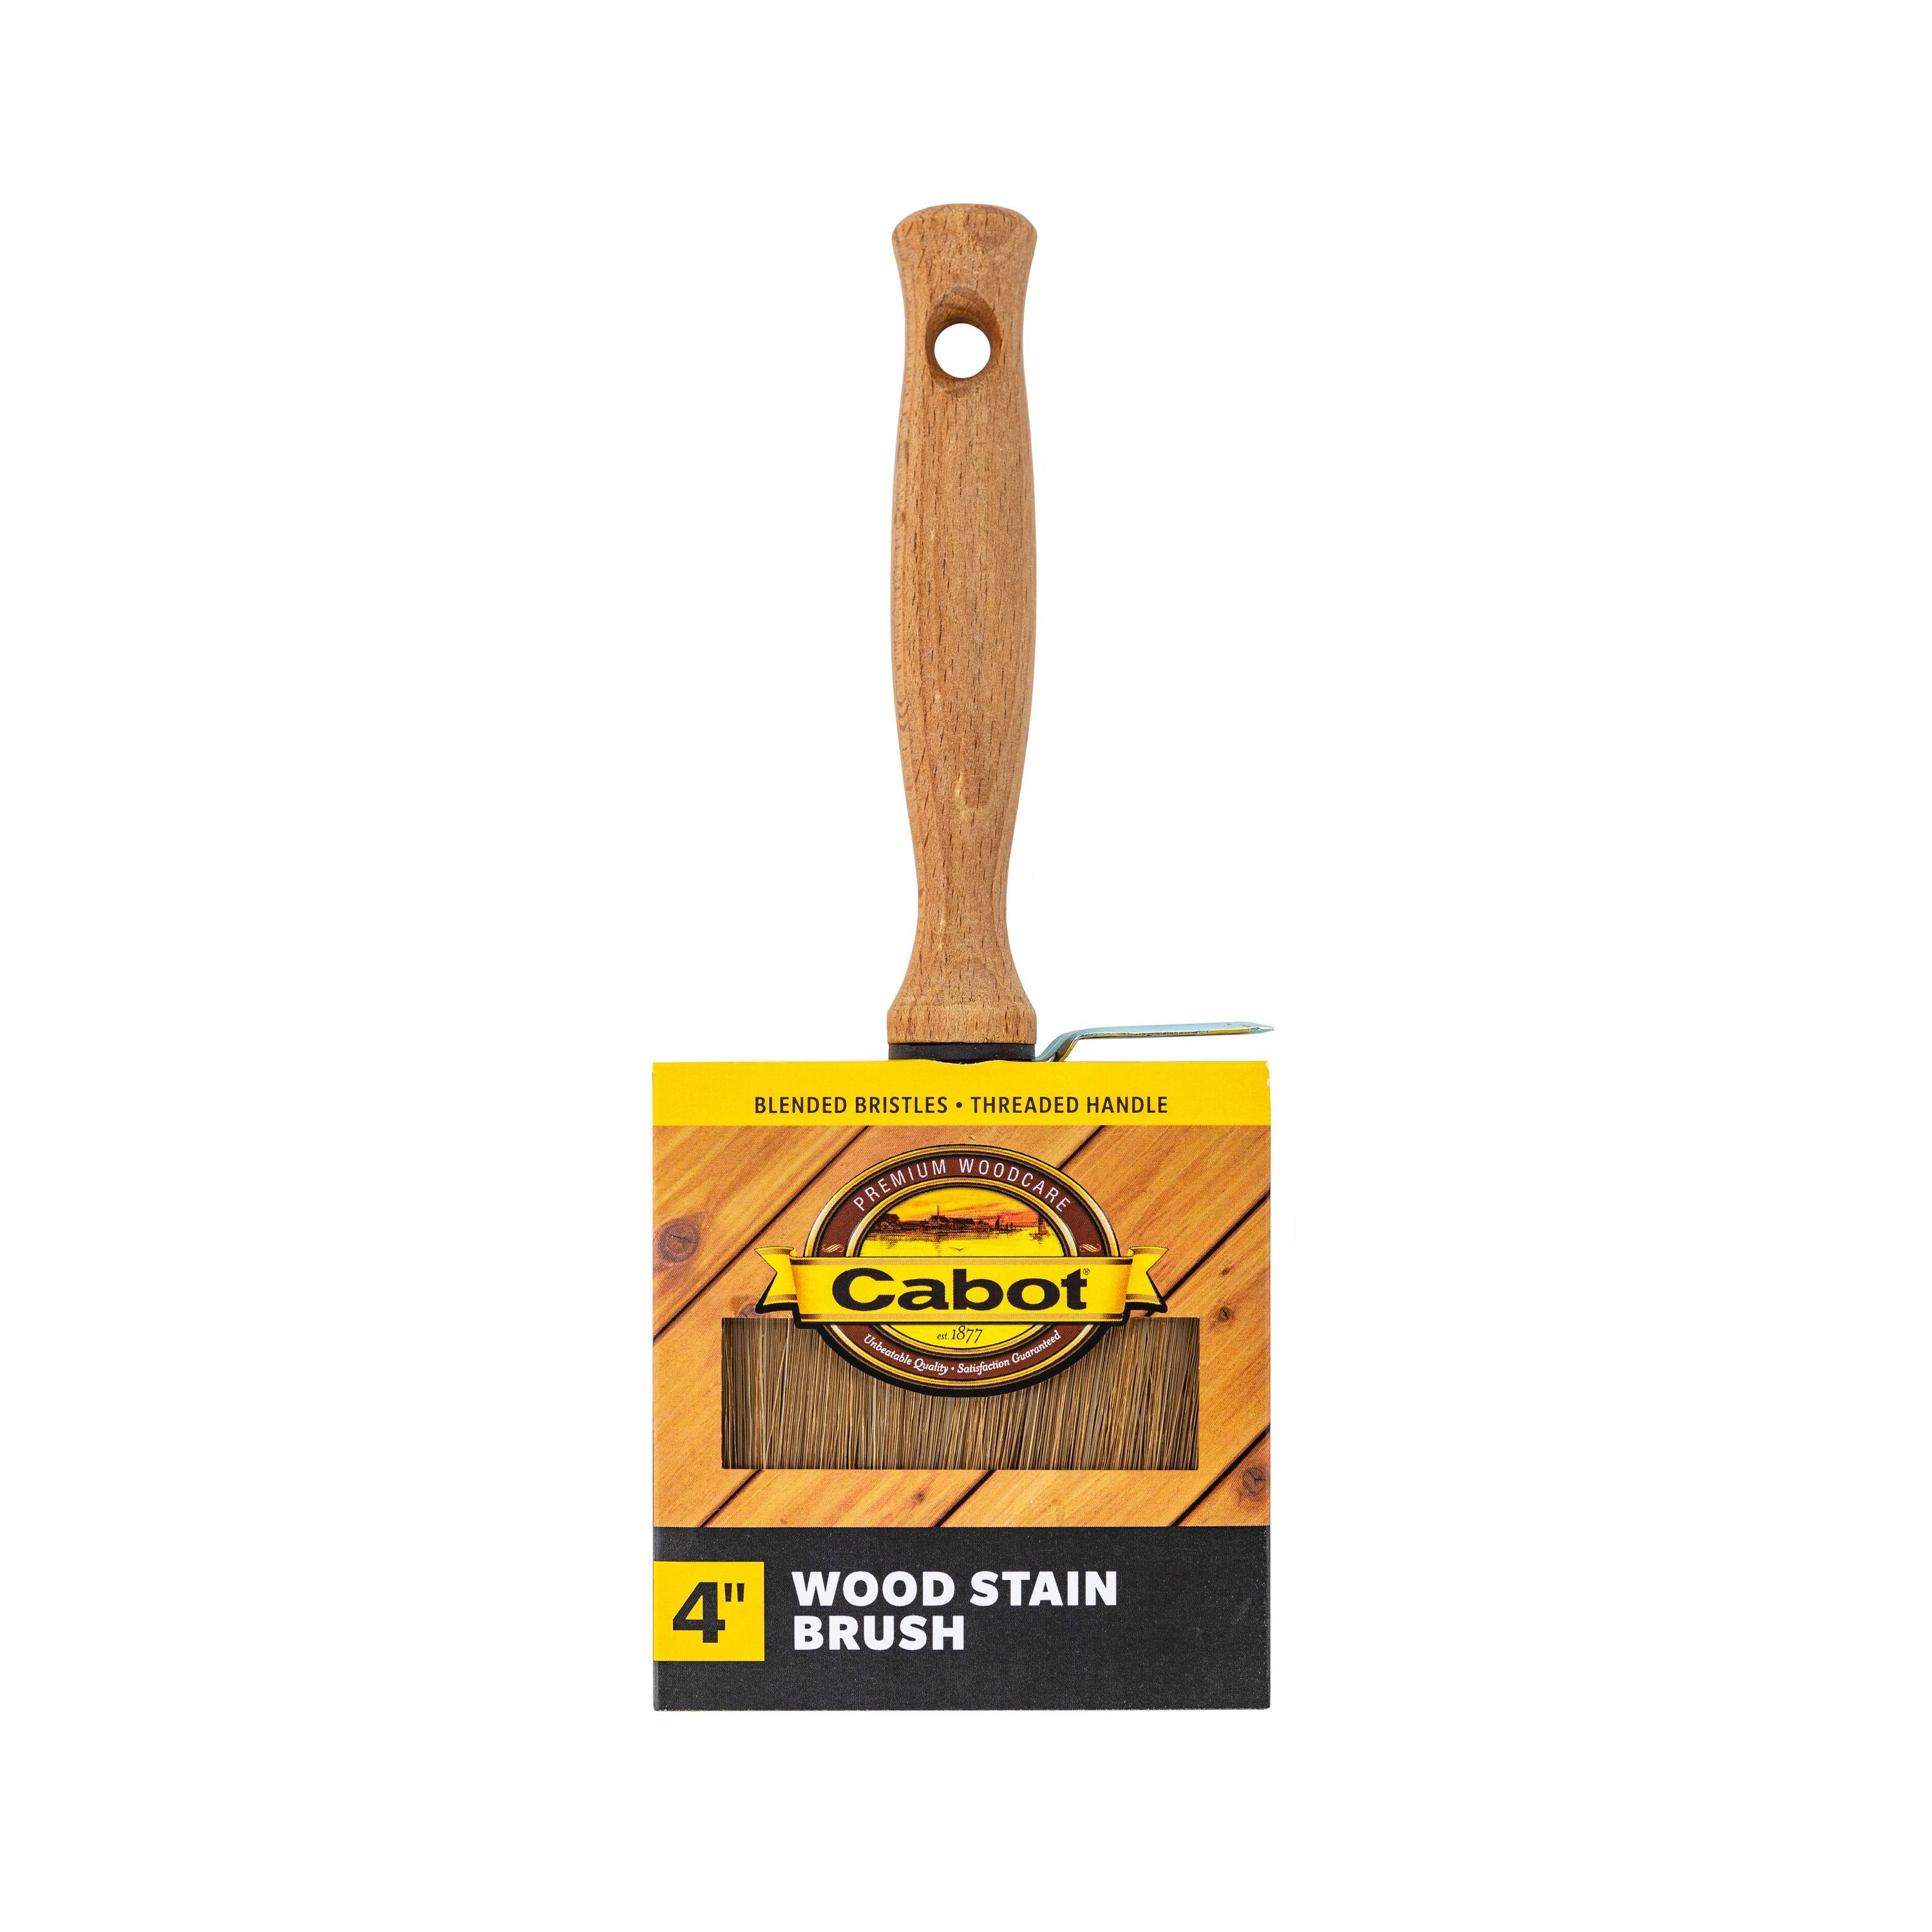 Cabot 4" Wood Stain Brush